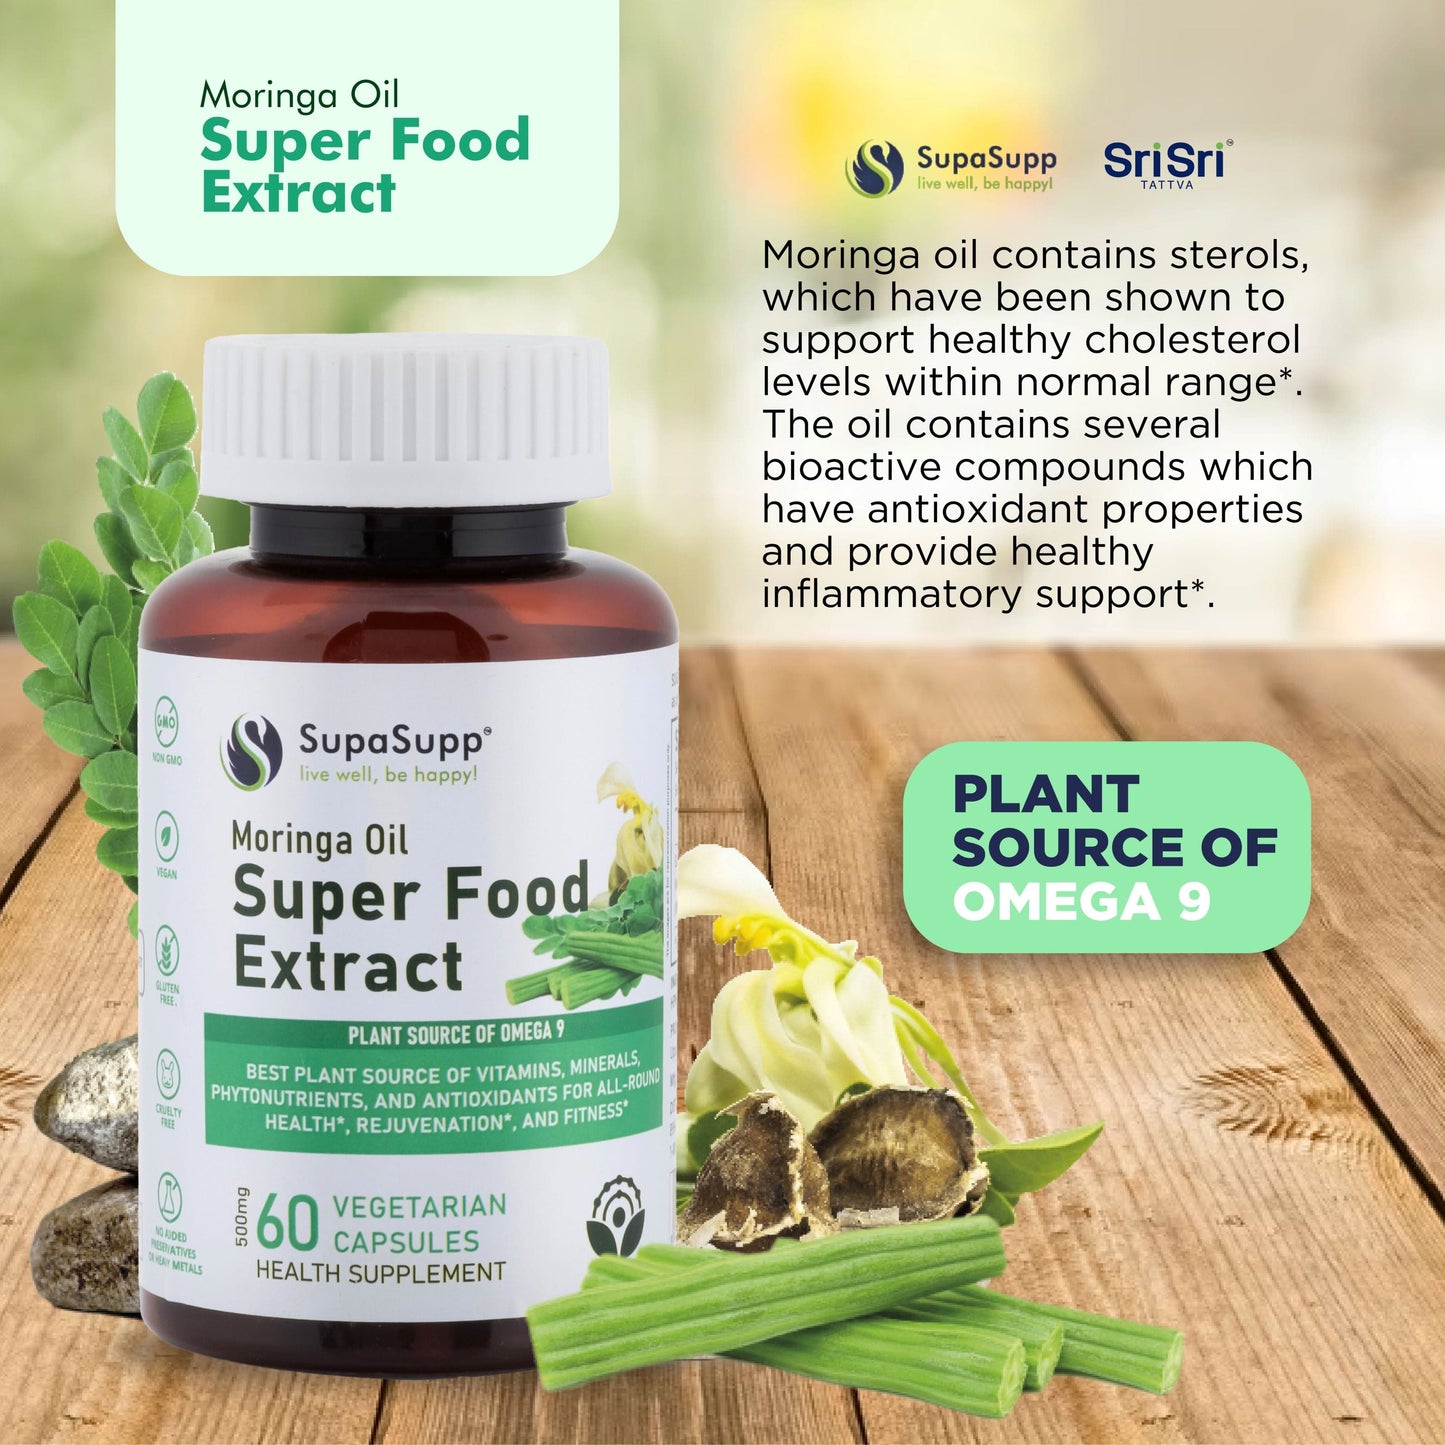 Sri Sri Tattva Herbs Moringa Oil Capsules Super Food Extract